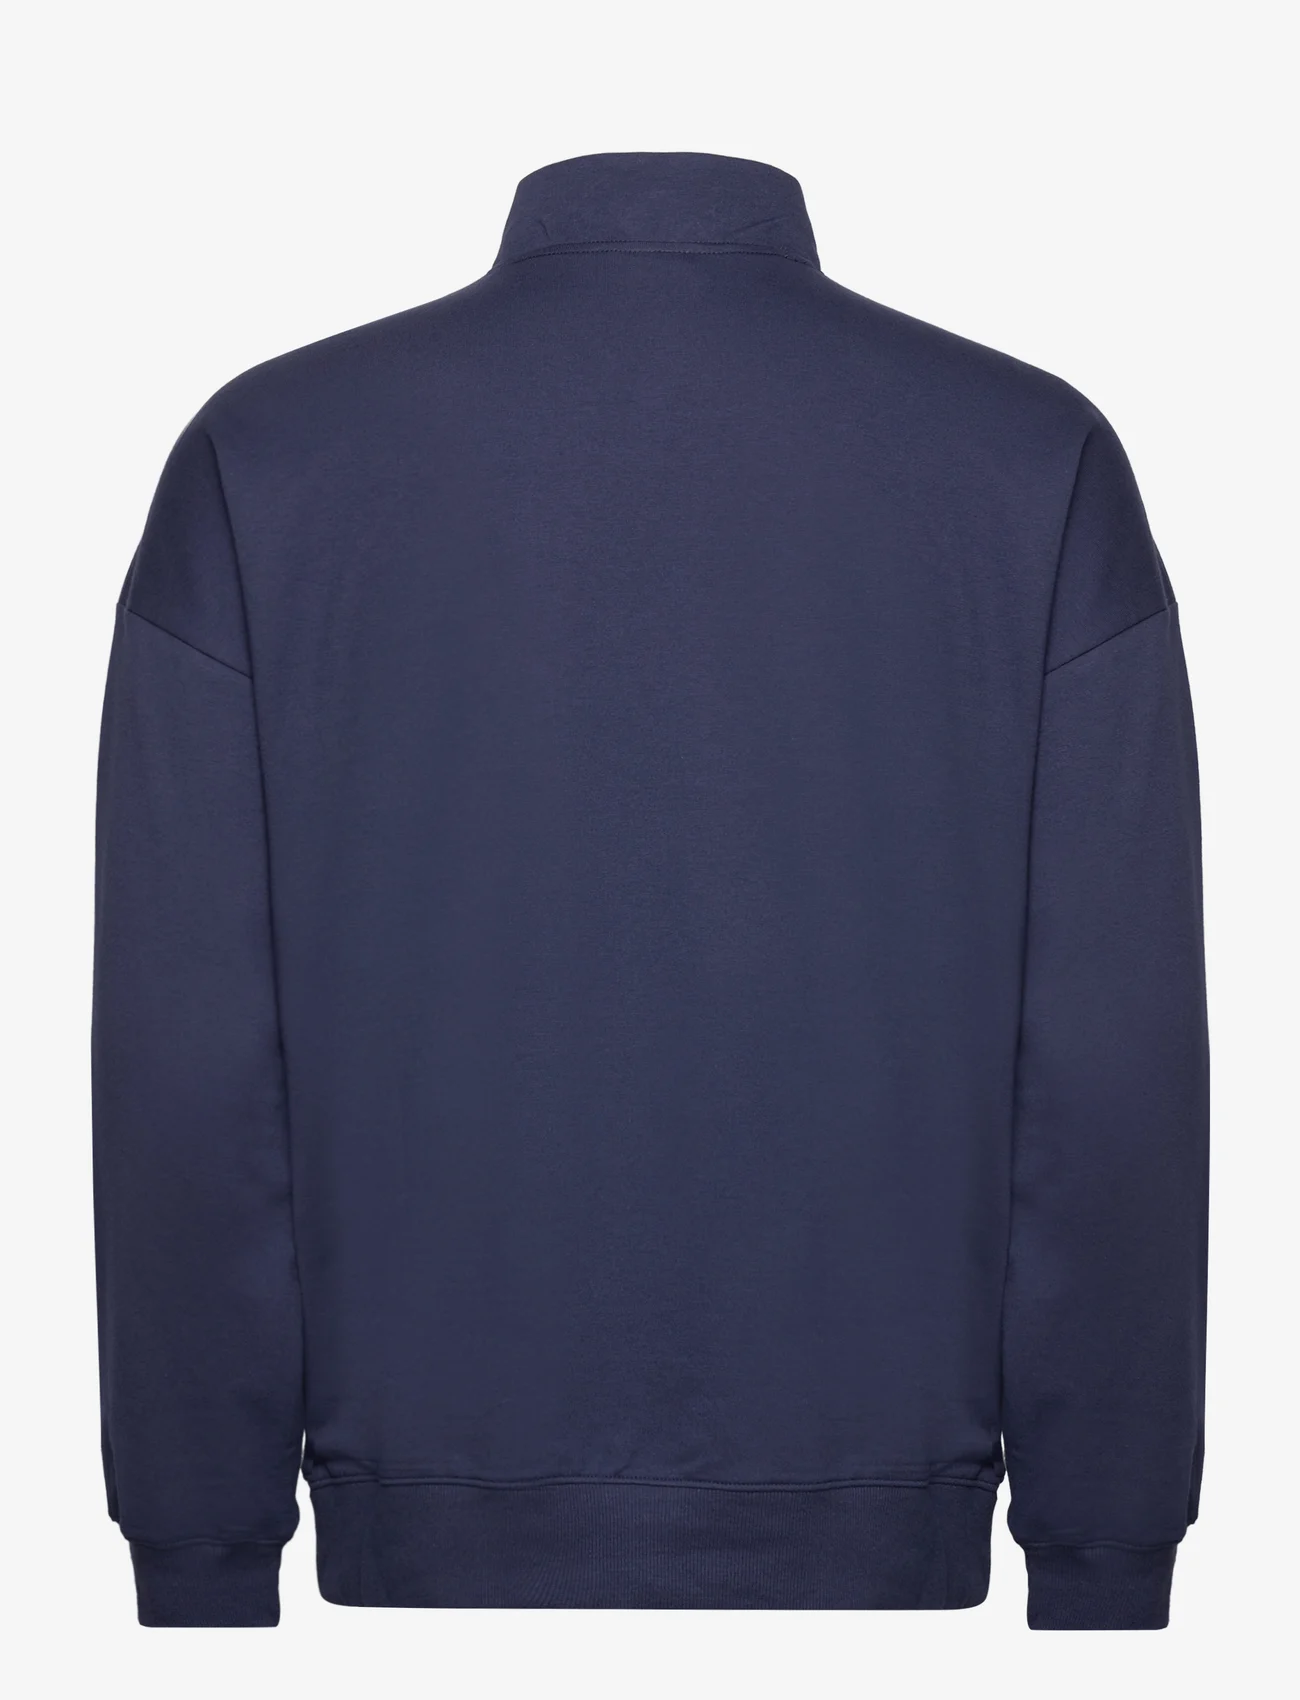 Calvin Klein - L/S QUARTER ZIP - sportiska stila džemperi - blue shadow - 1